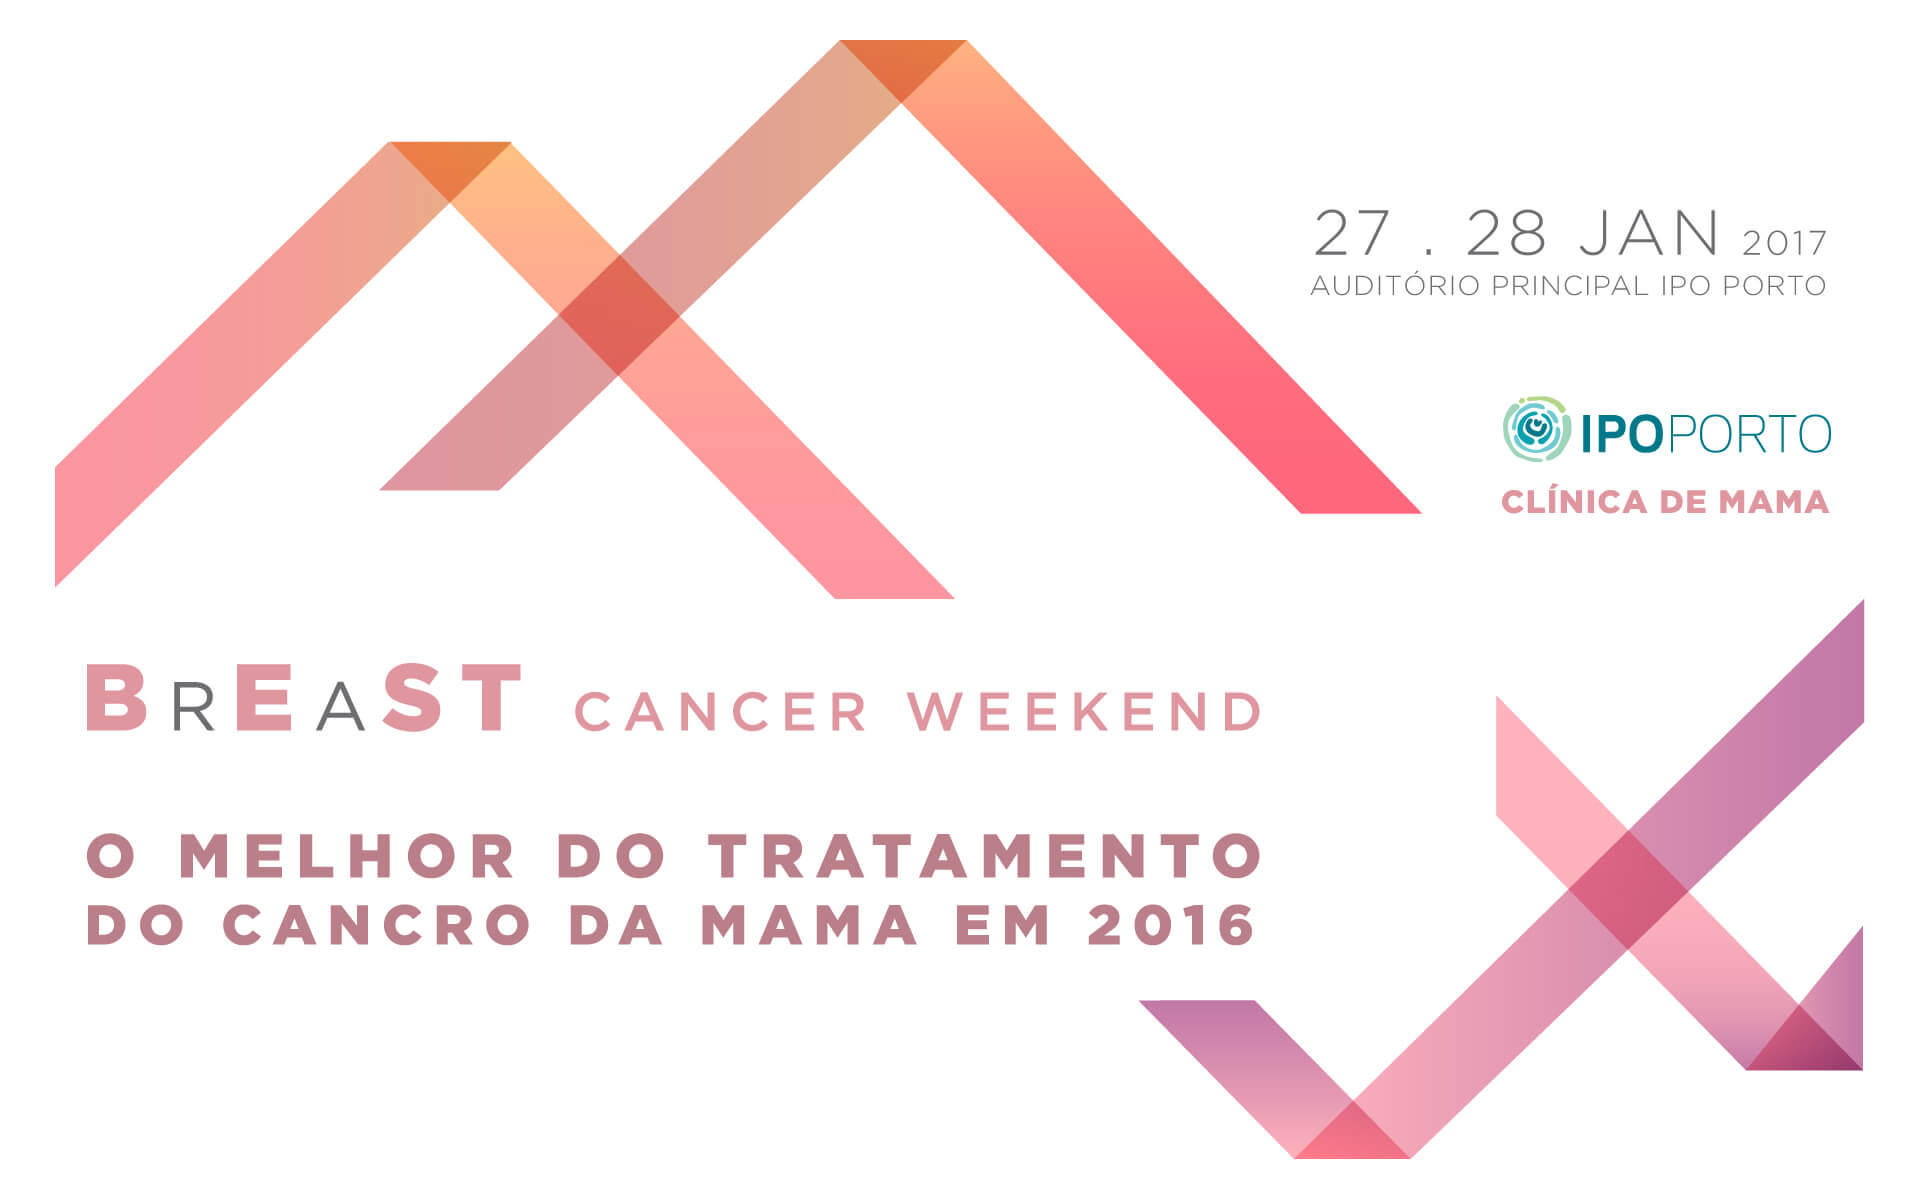 BrEaST Cancer Weekend